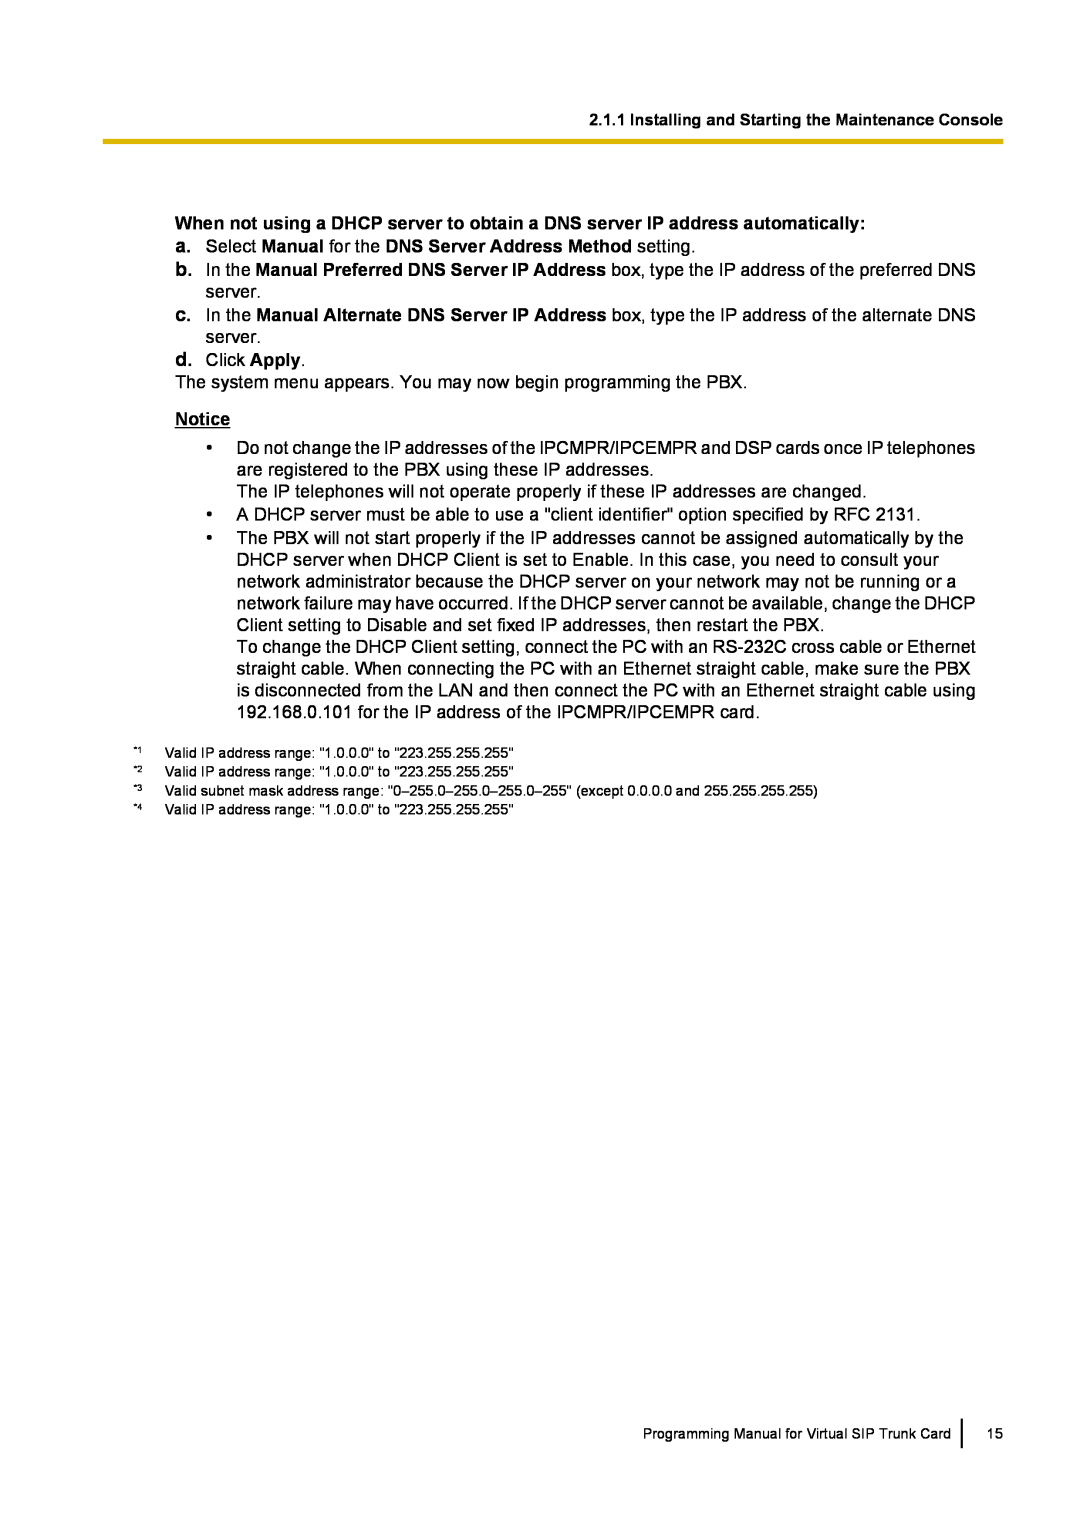 Panasonic KX-TDE100 manual a. Select Manual for the DNS Server Address Method setting 